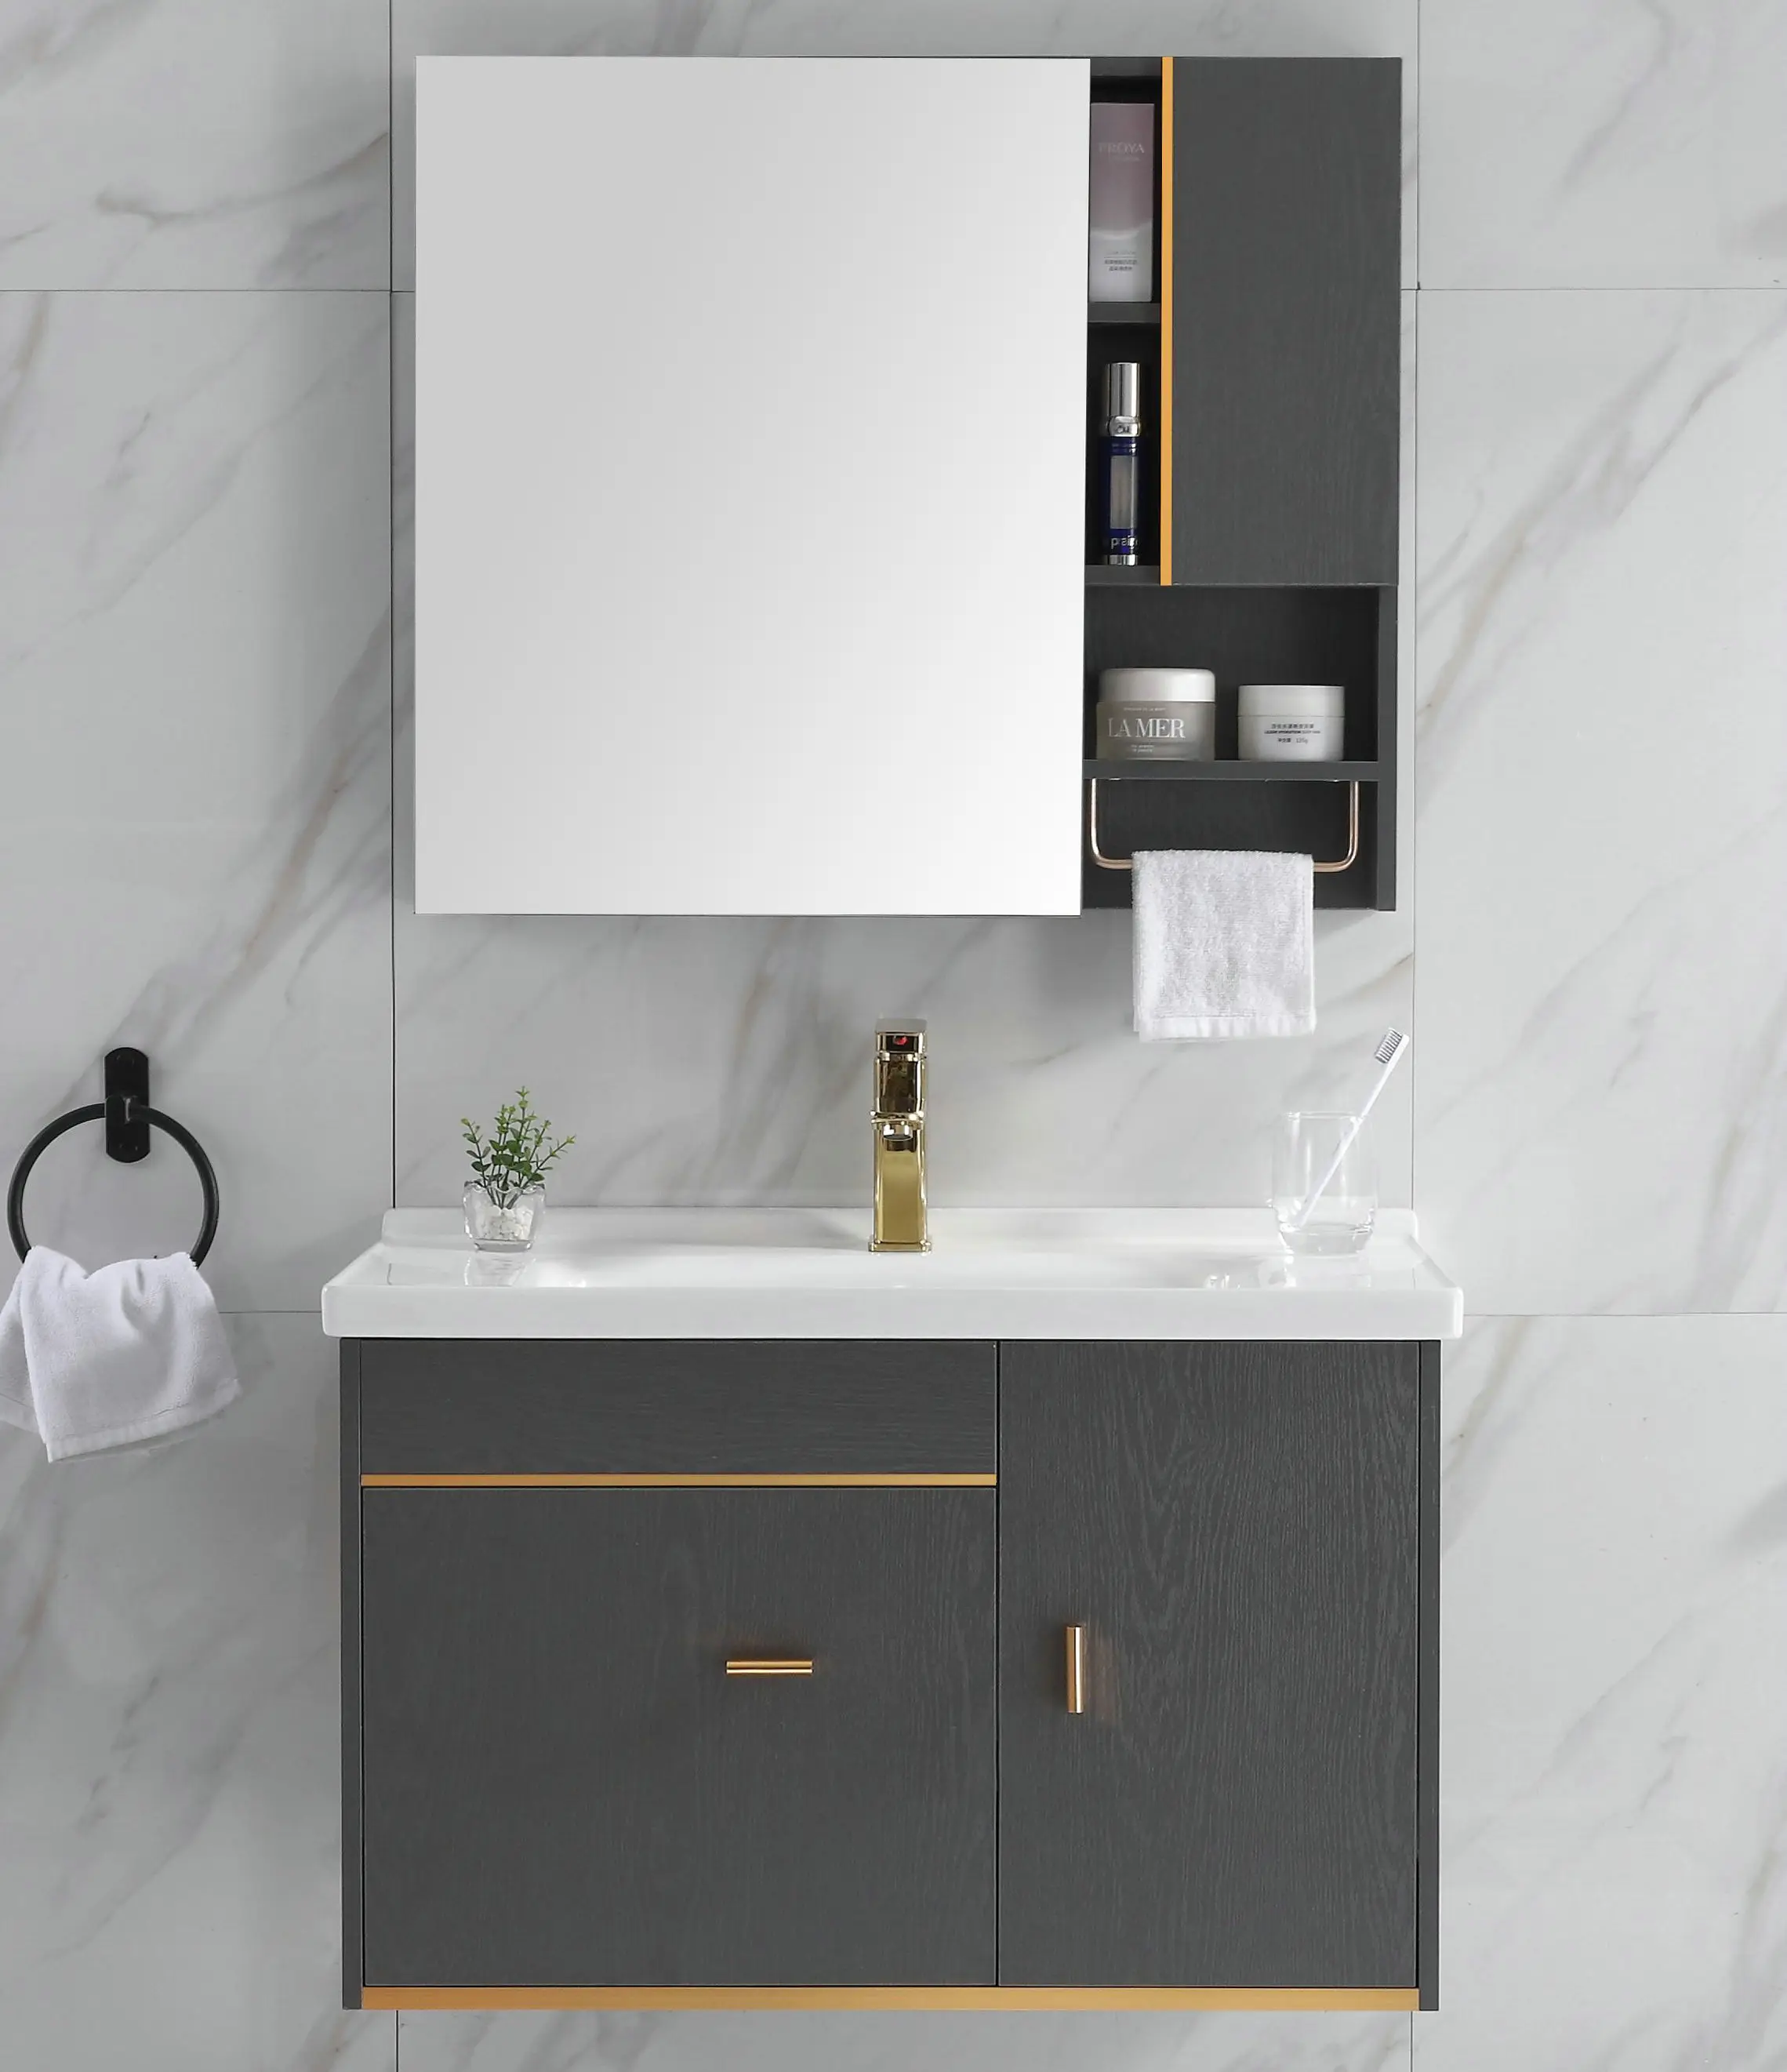 JOININ 80cm mirror cabinet creative elegant simple bathroom vanity cabinet with light